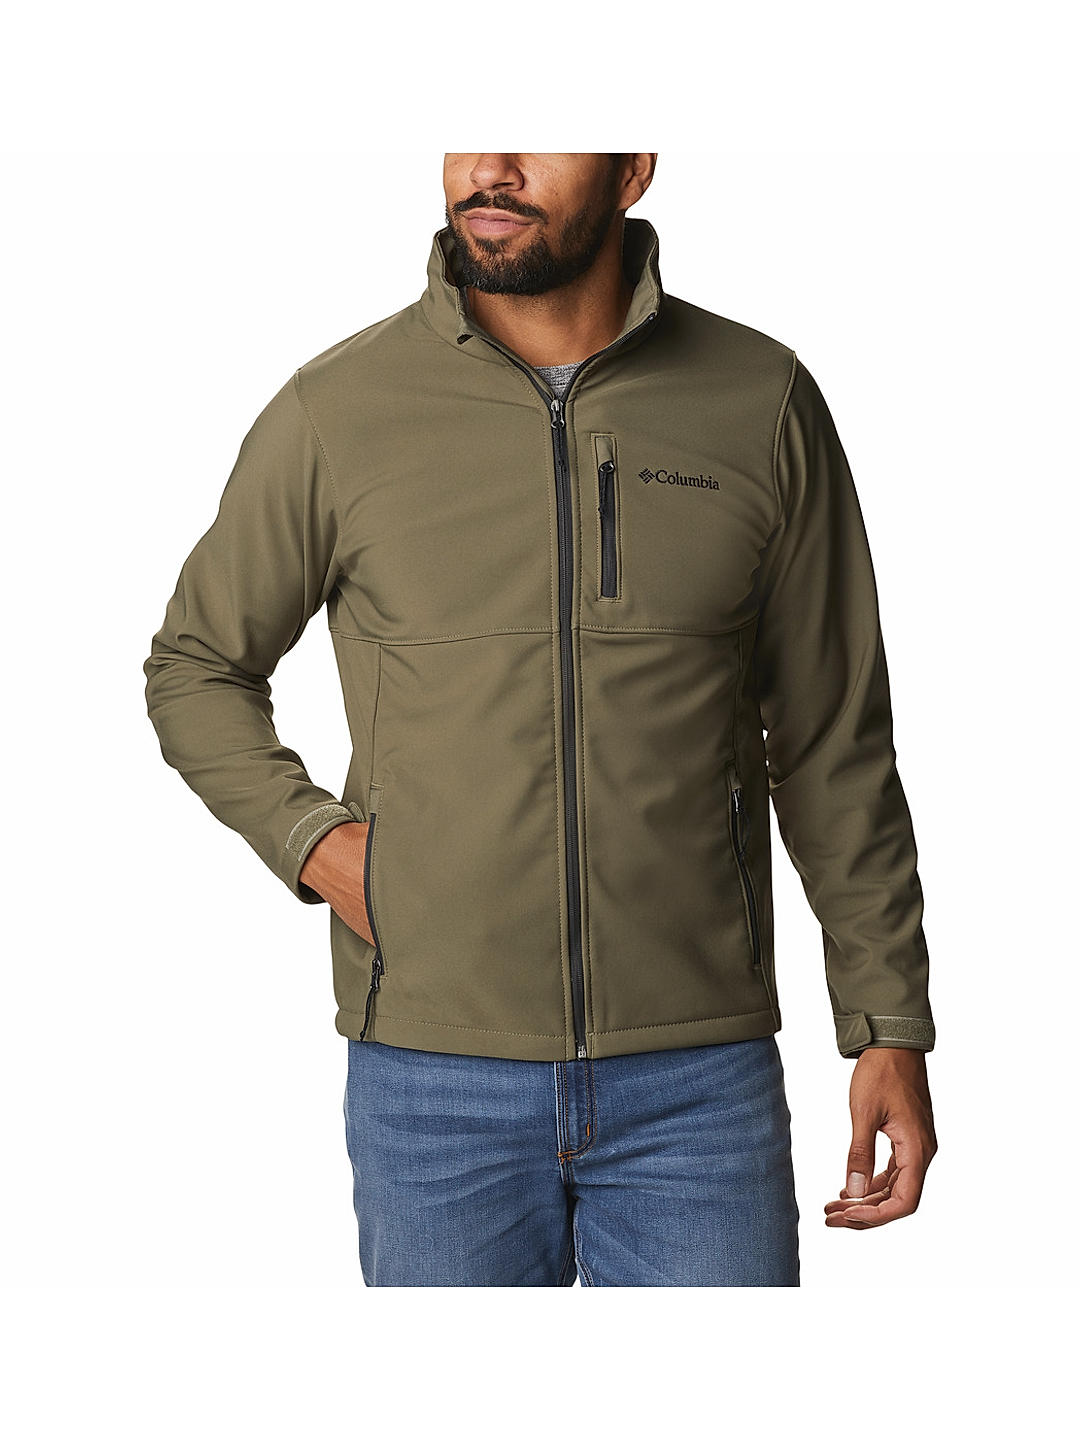 Buy Green Ascender Softshell Jacket for Men Online at Columbia